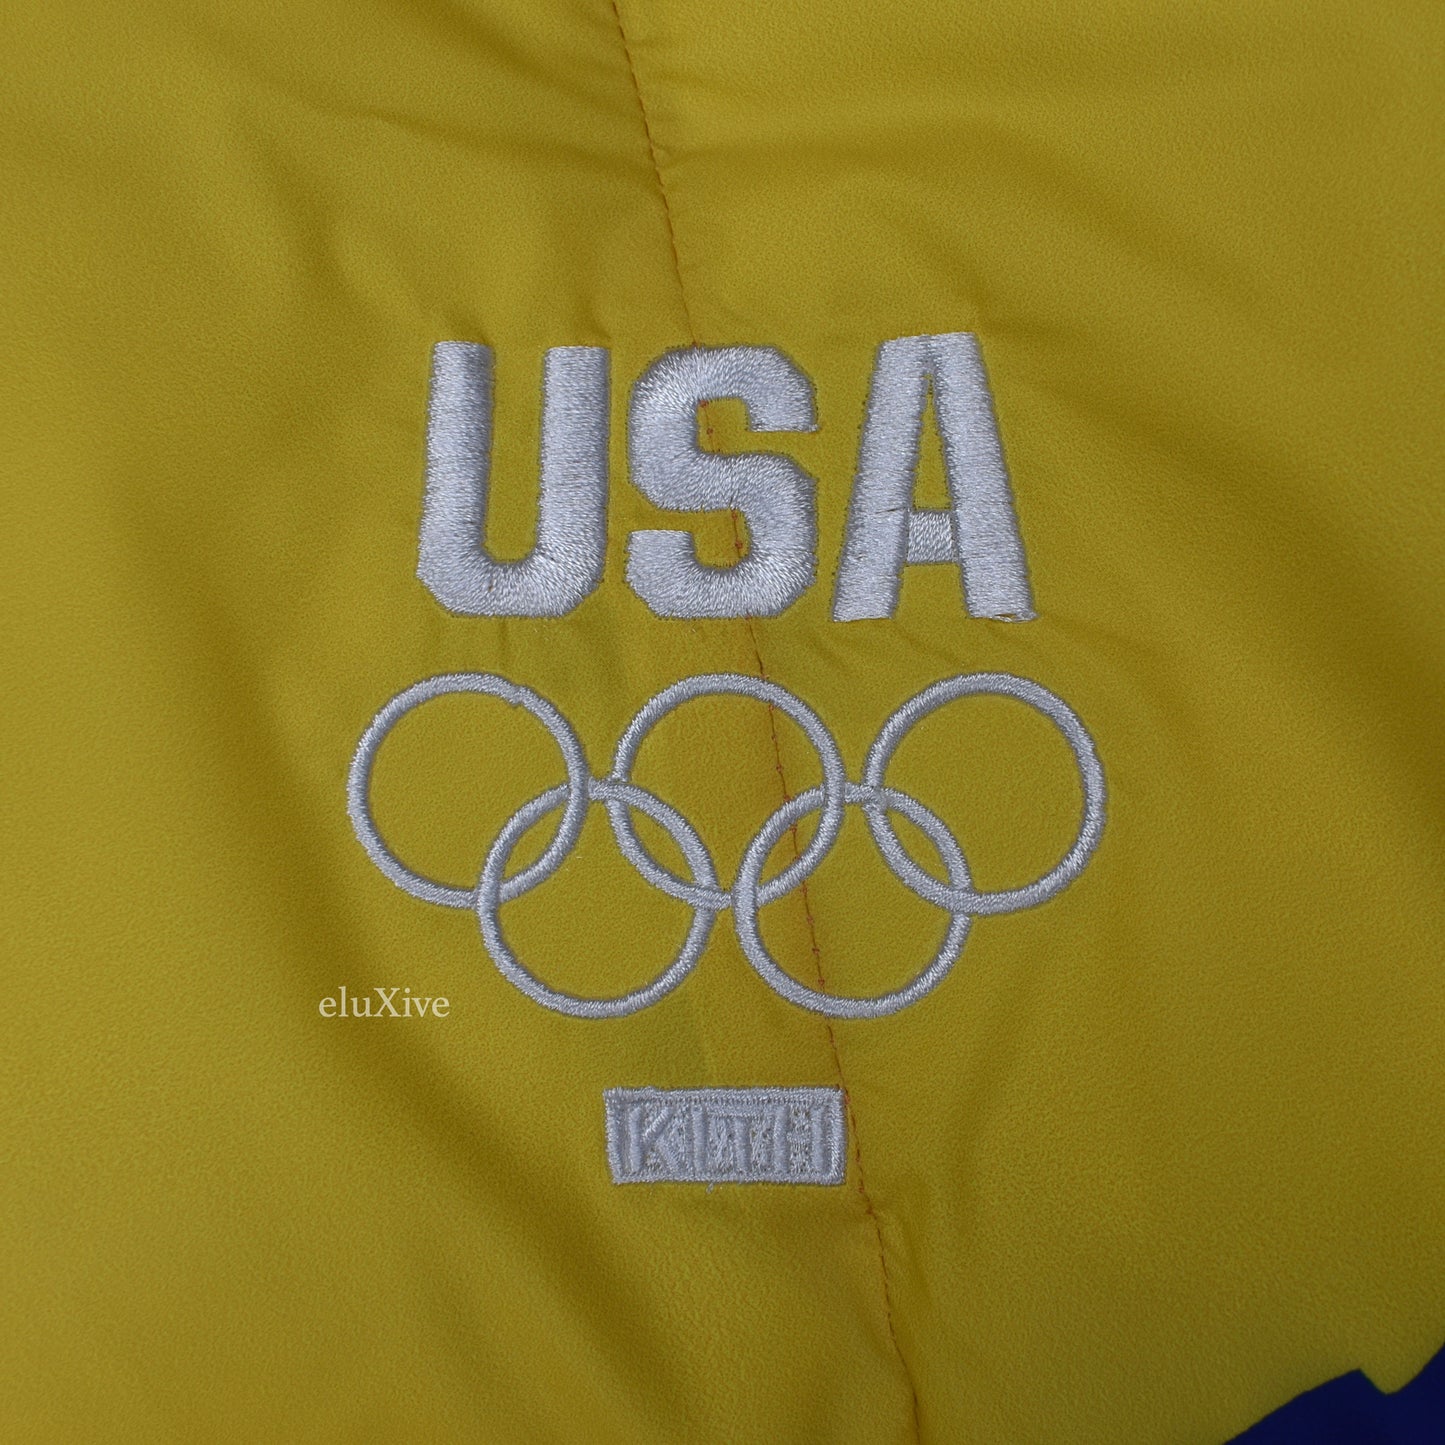 Kith - Team USA Mountain Print Puffer Jacket